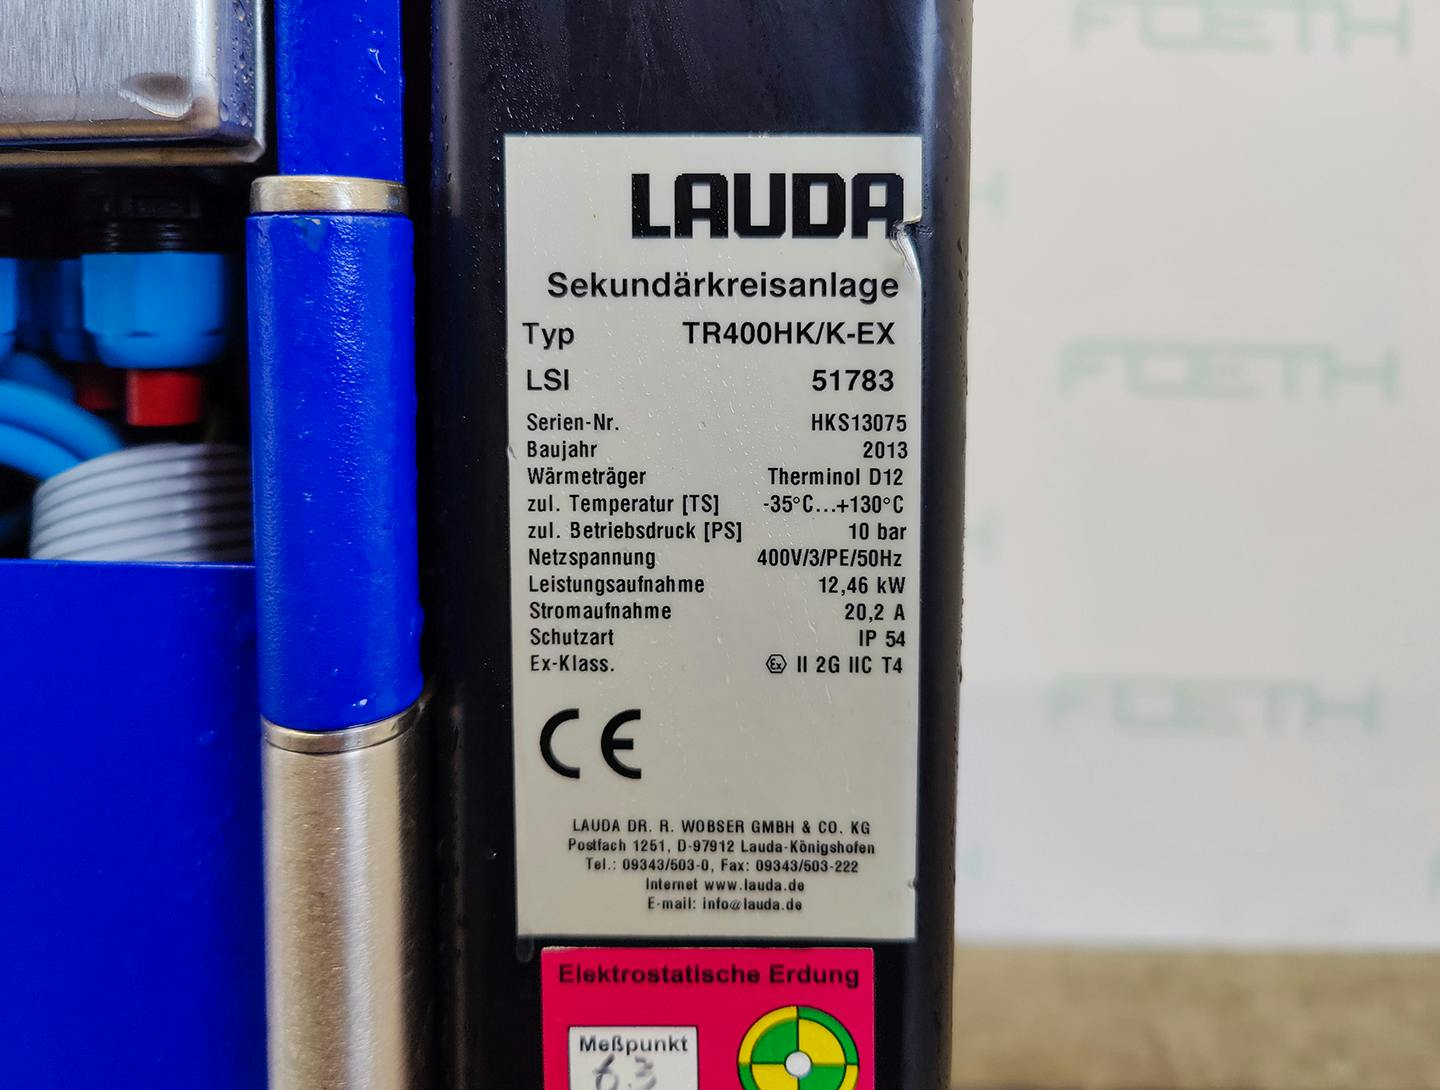 Lauda TR400 HK/K-EX "secondary circuit system" - Unidade de fluido térmico - image 6